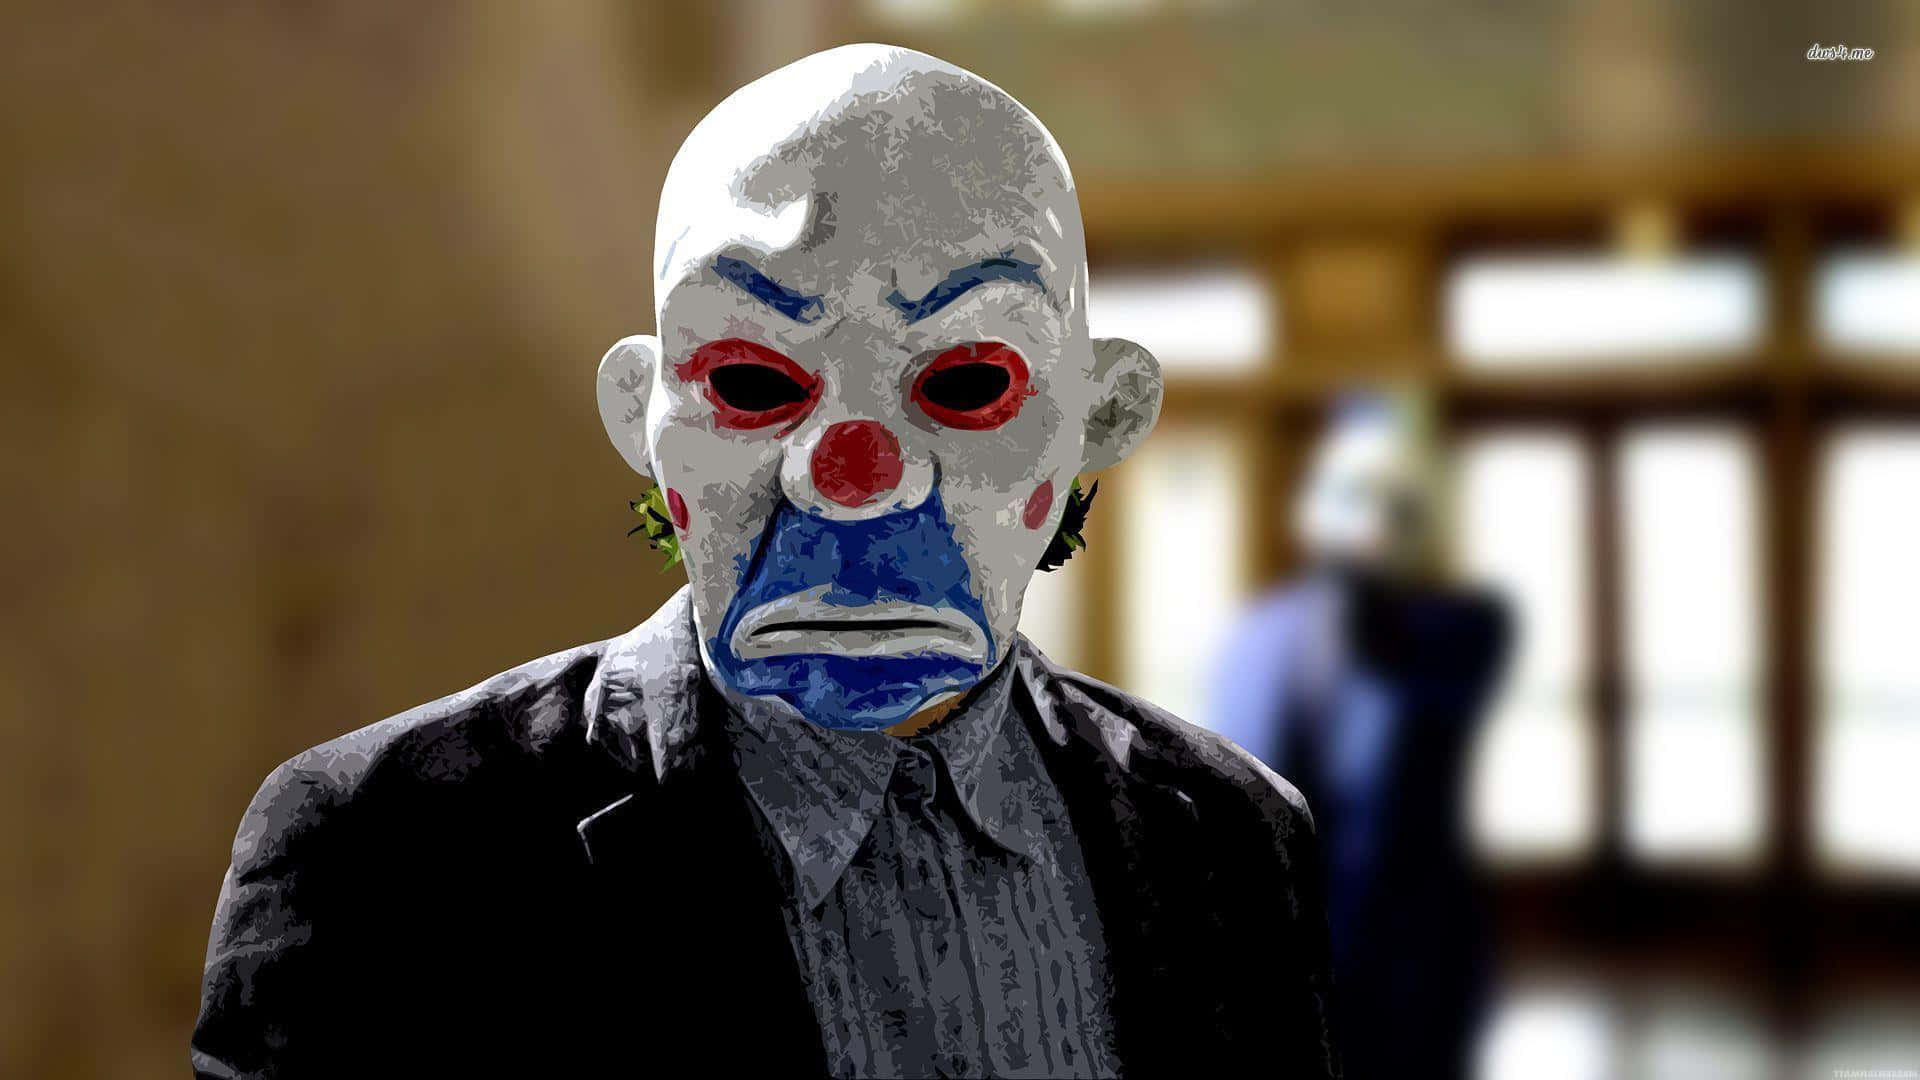 Enondsint Leende Bildas Mystiskt På En Mörk Joker Mask.